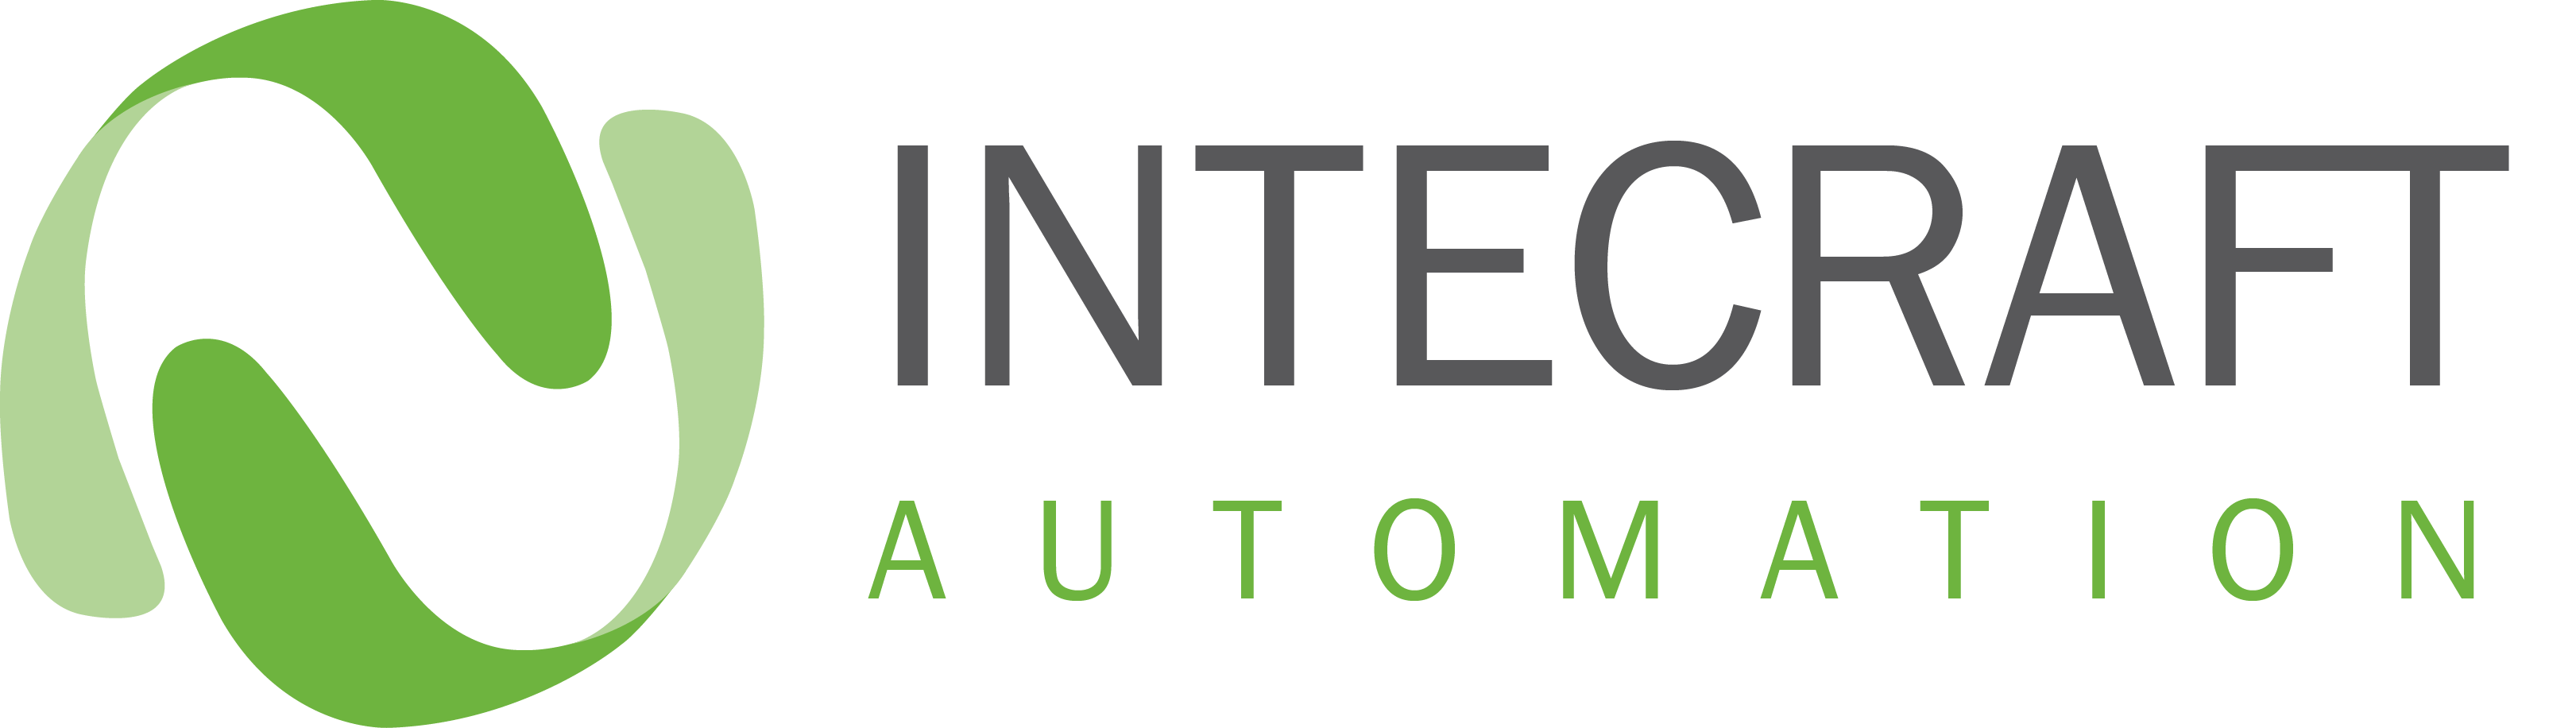 InteCraft Automation logo